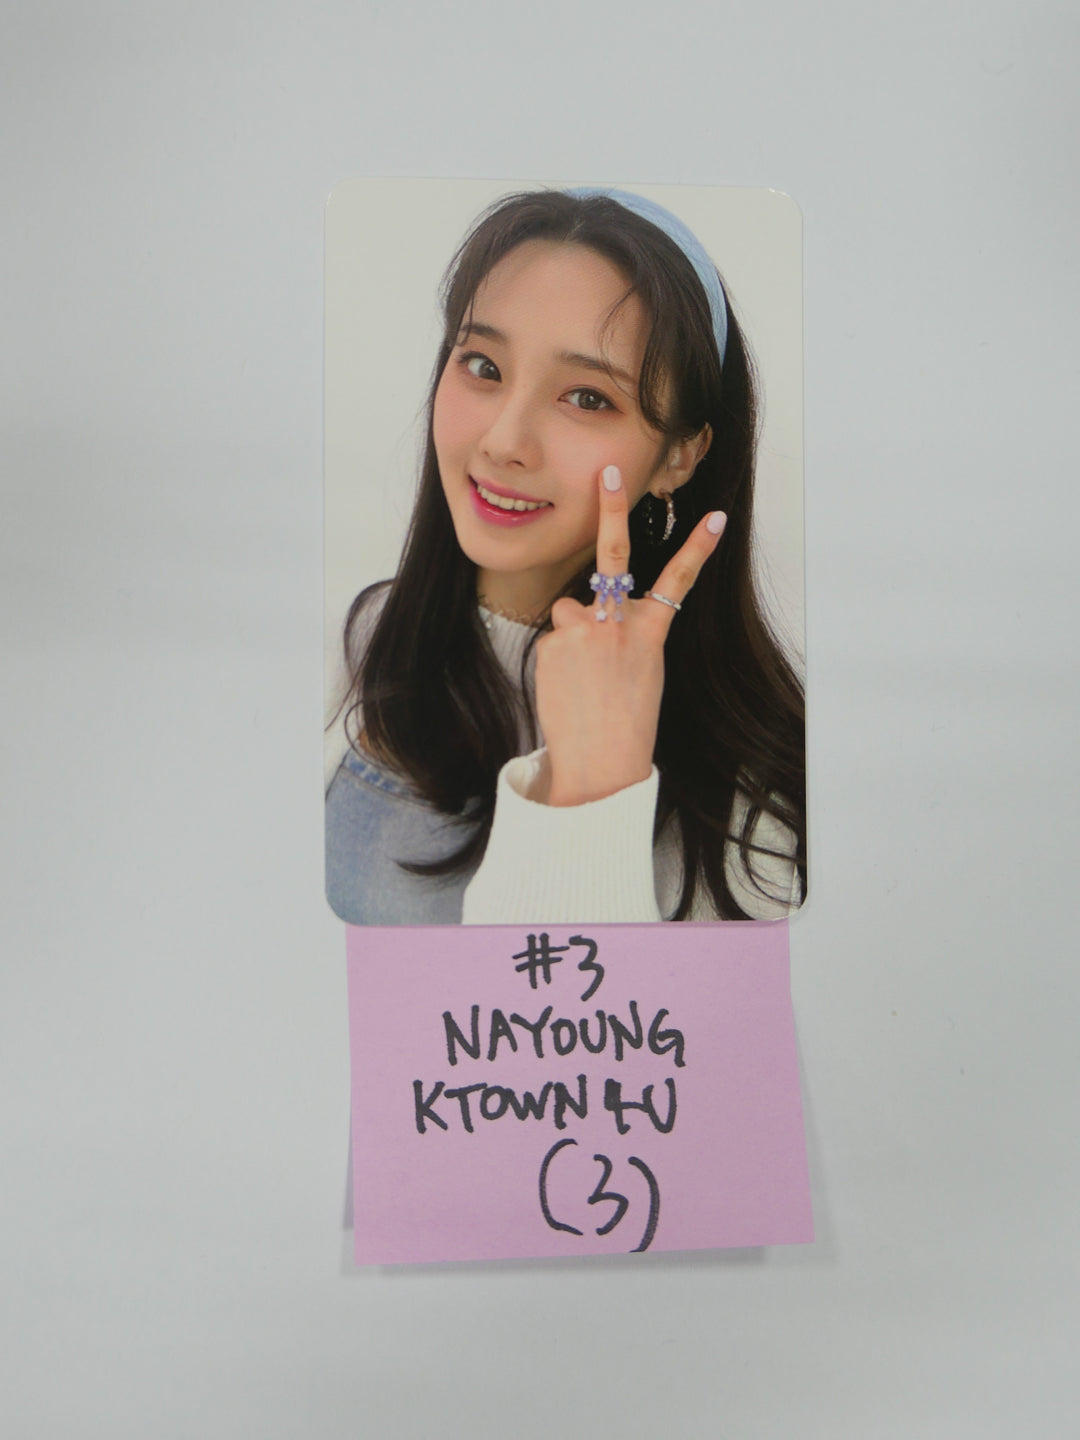 Lightsum 'Vanilla' - Ktown4U Fan Sign Event Photocard